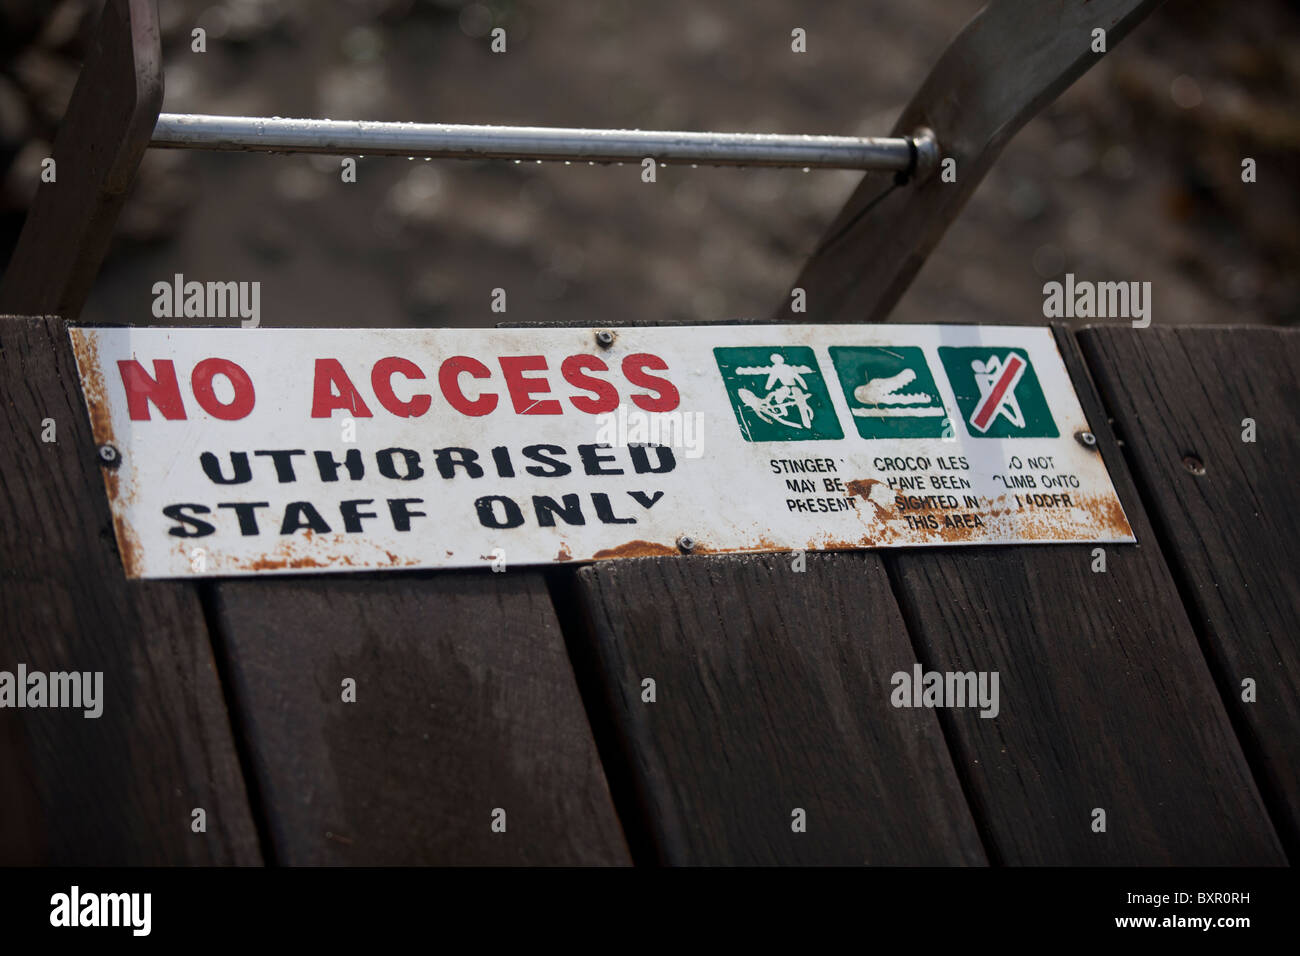 No Access due to danger from crocodiles in area sign. Esplanade in Cairns Queensland, Australia. Stock Photo